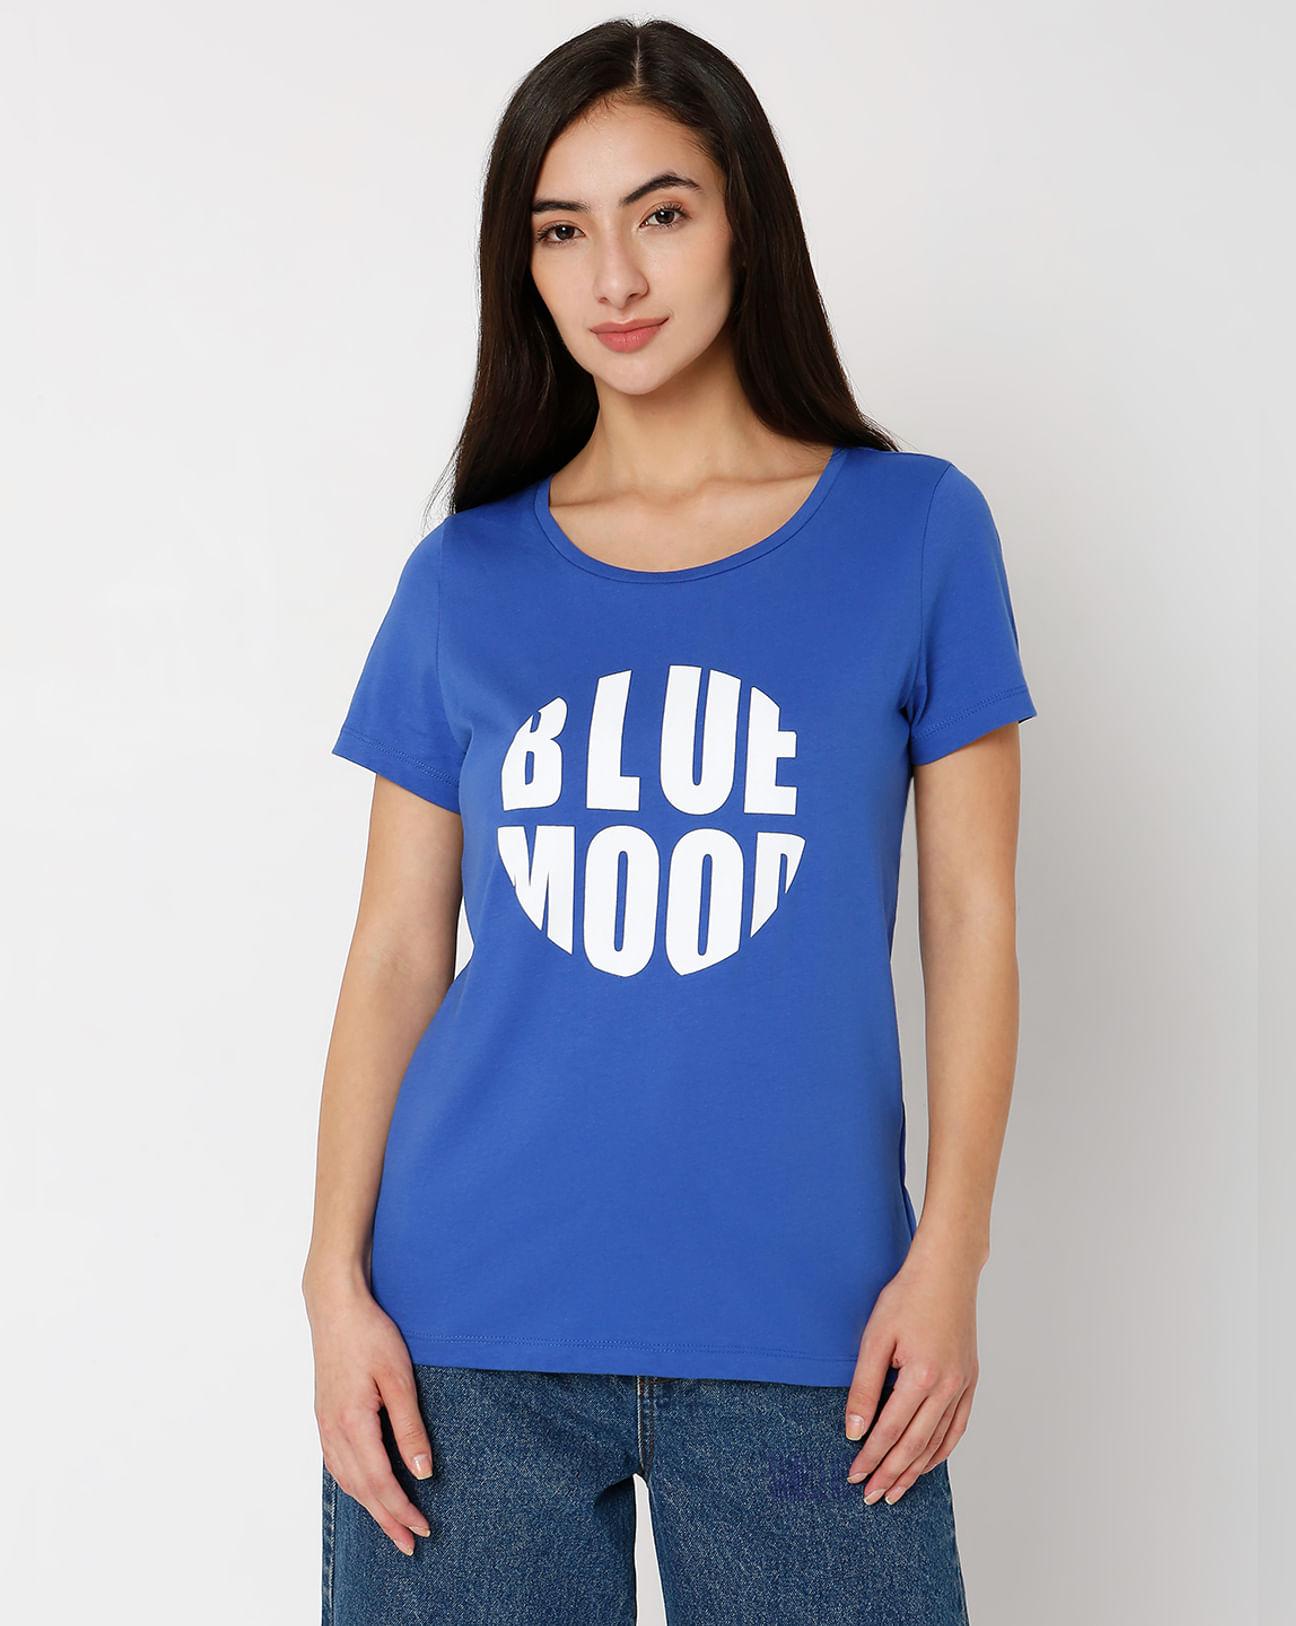 blue typographic print t-shirt